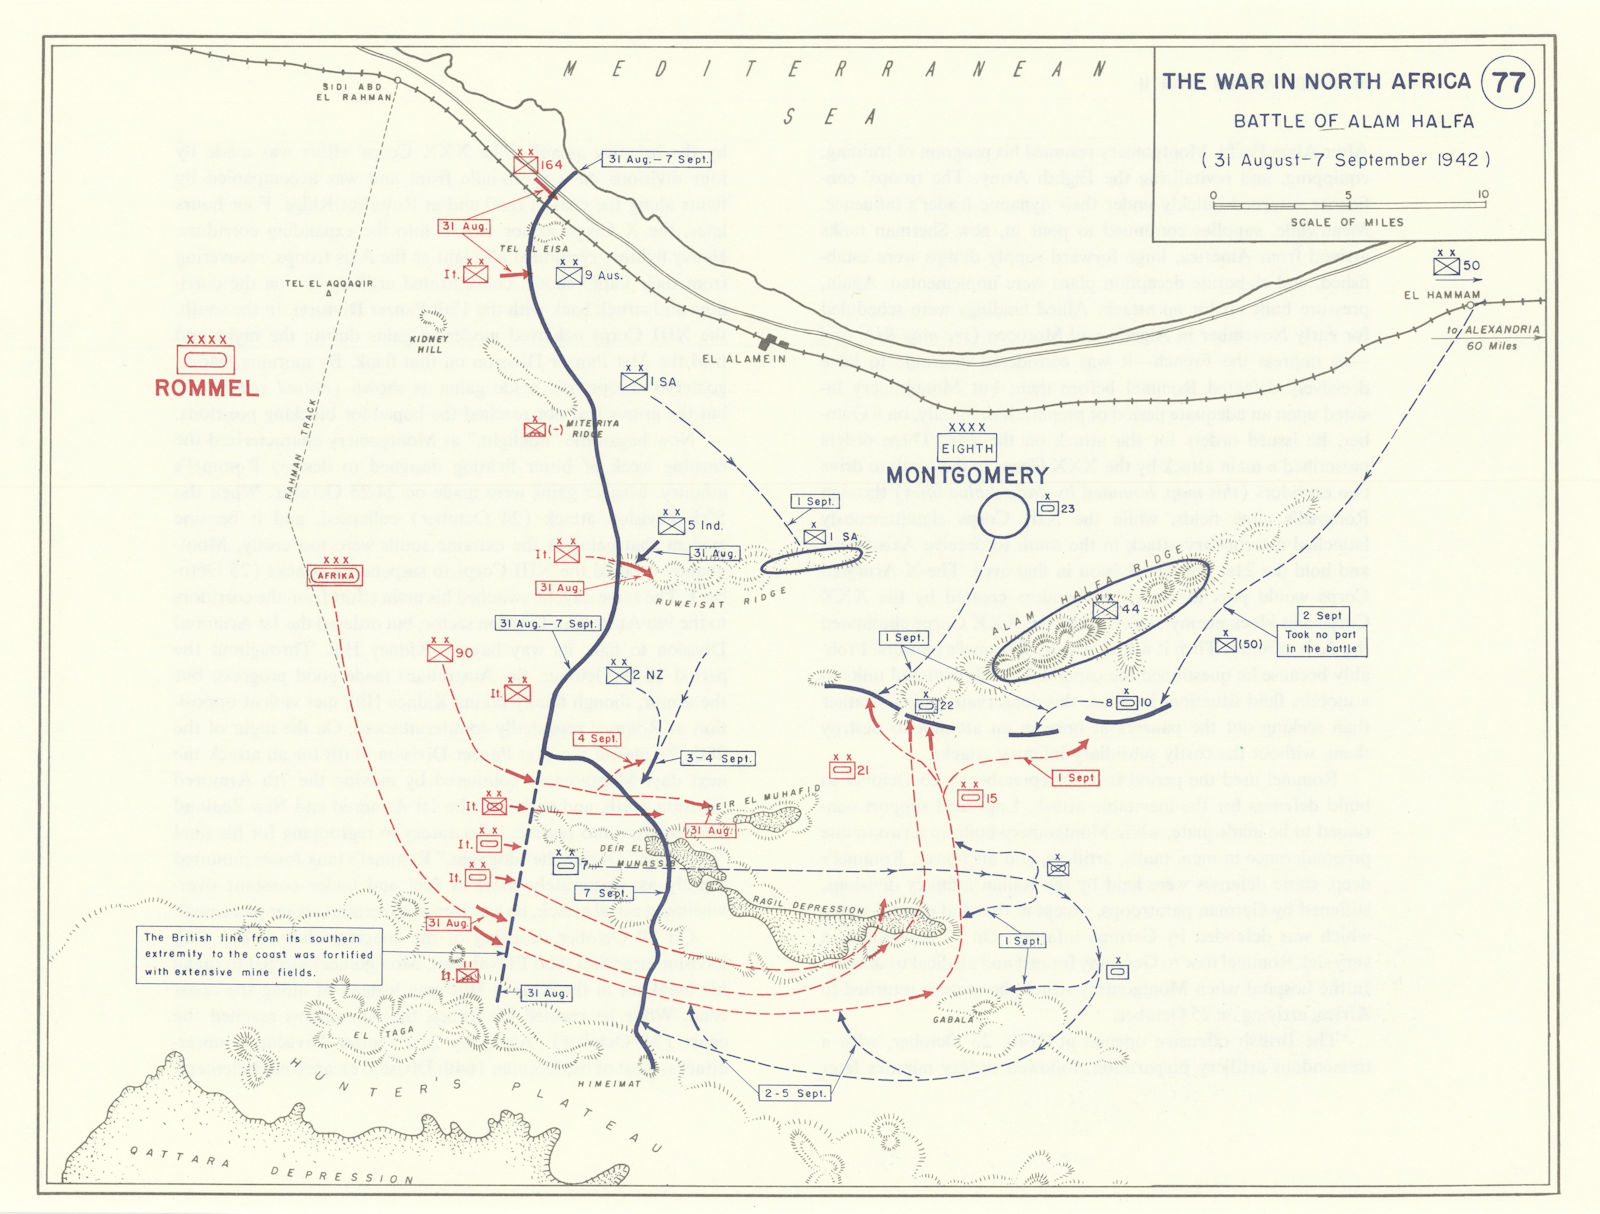 World War 2. North Africa. 31 August-7 Sept 1942. Battle of Alam Halfa 1959 map